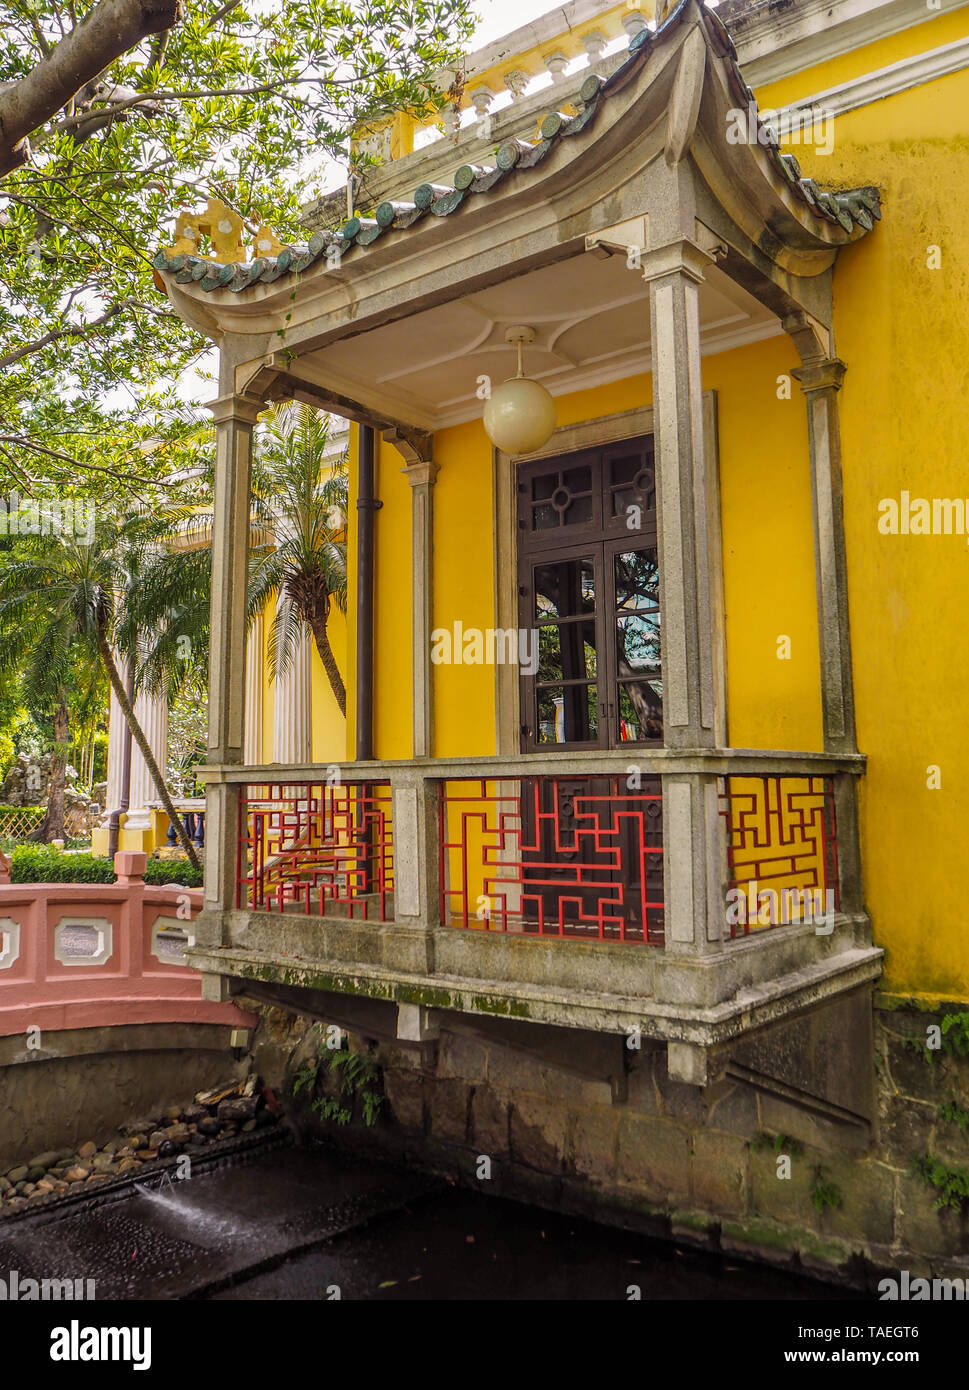 MACAU, CHINA - NOVEMBER 2018: The vibrant yellow Qingcao hall of the Lou Lim Leoc public garden and park Stock Photo